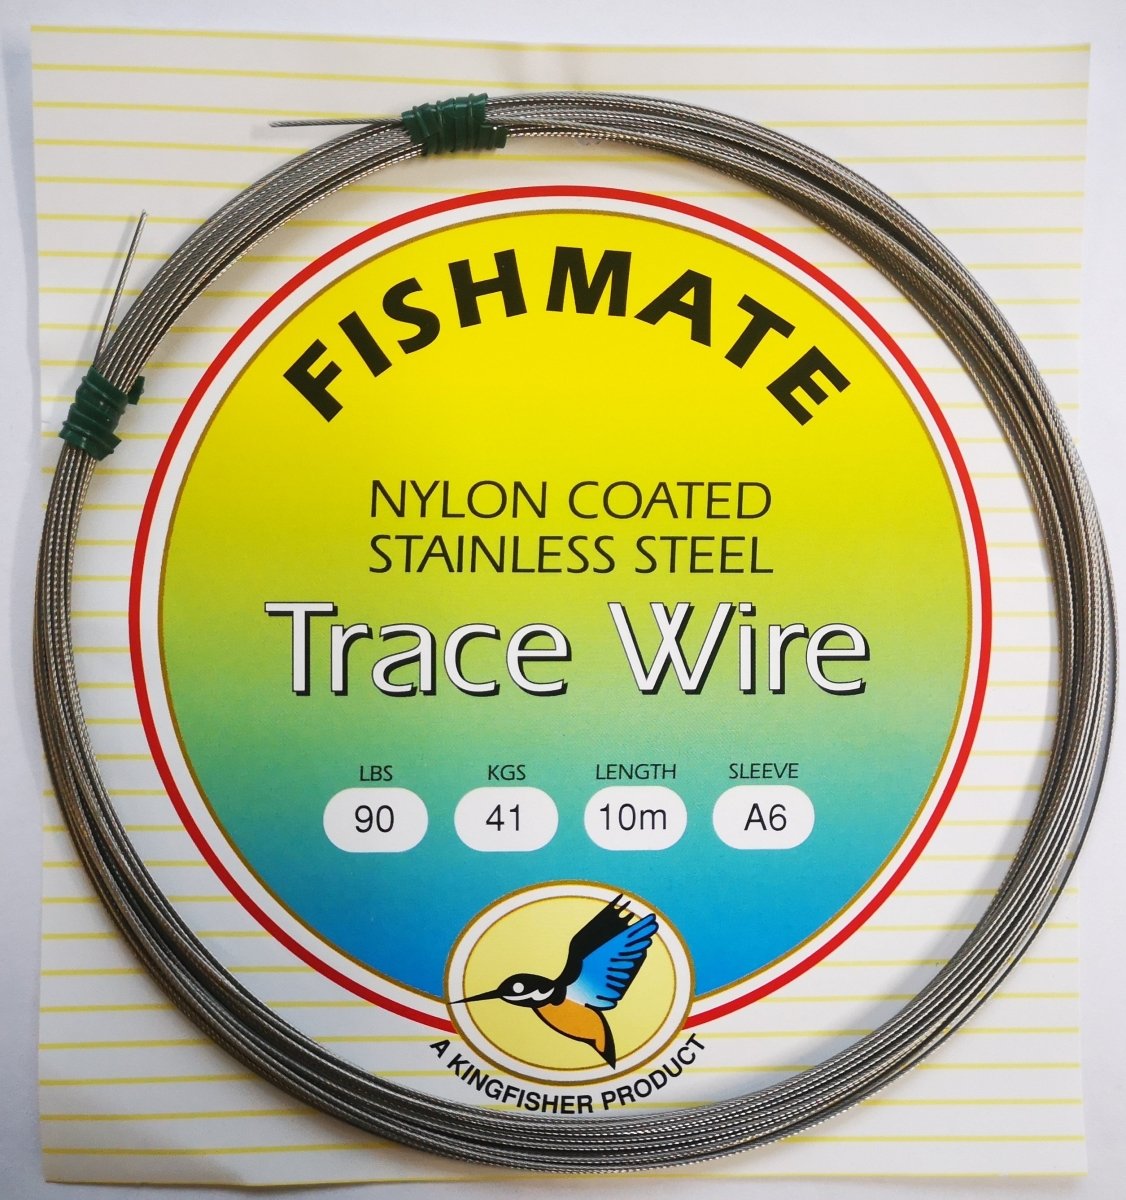 Fishmate Nylon Coated Wire – Stil Fishing